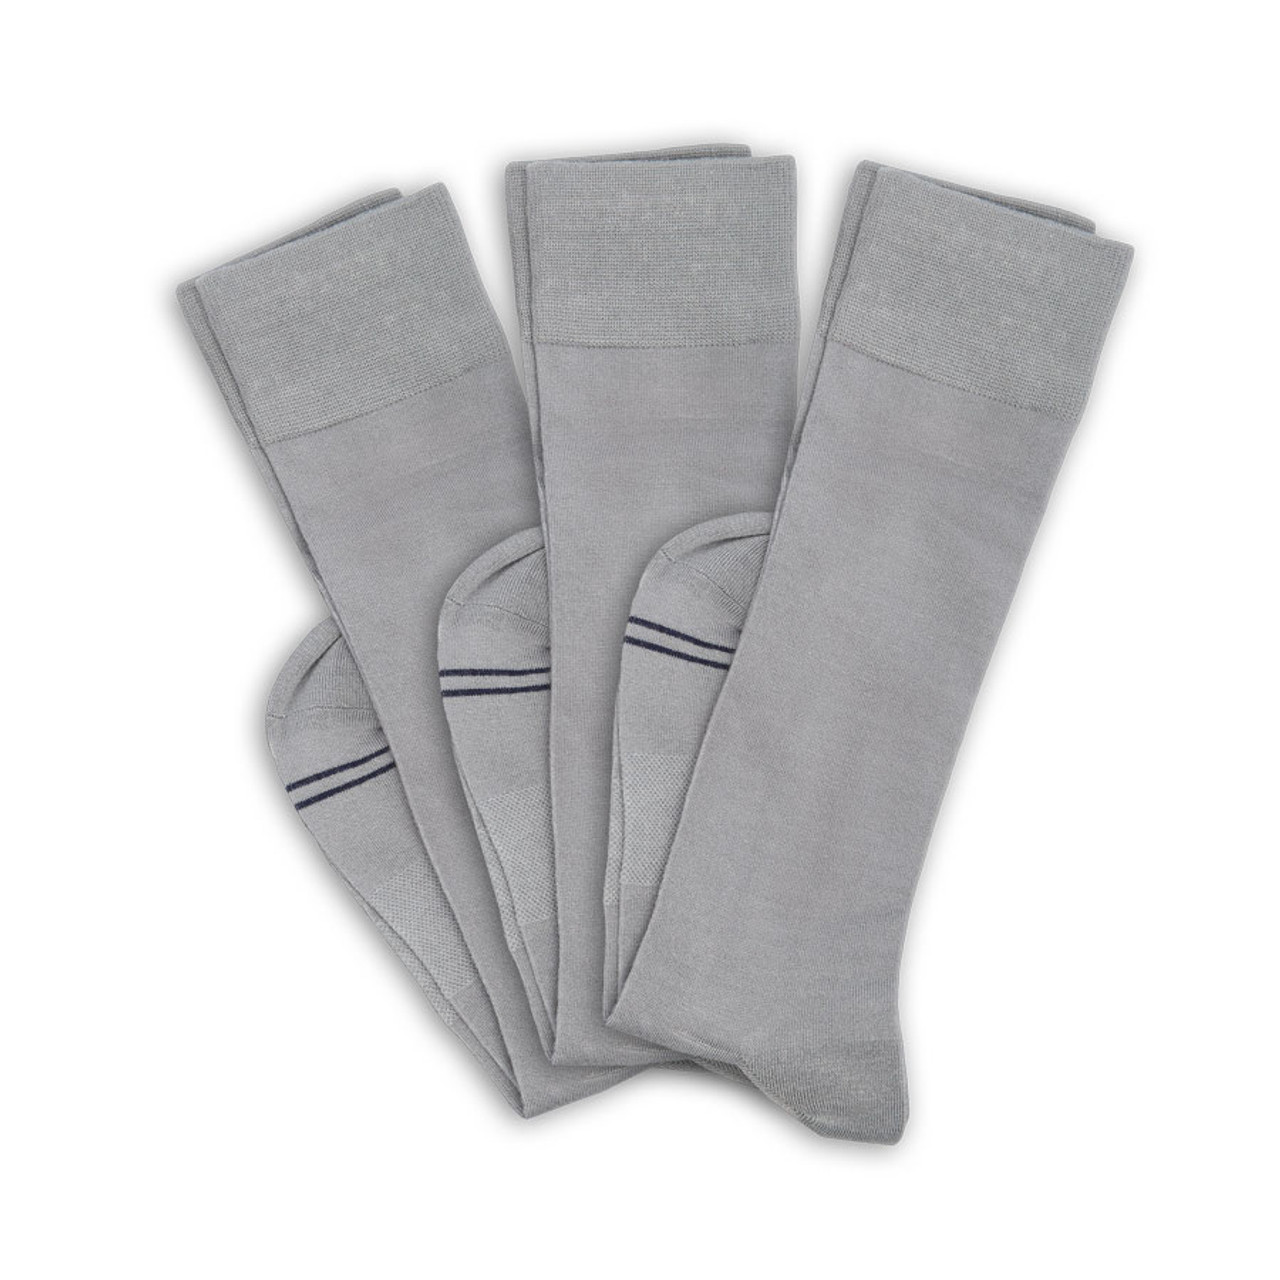 Ankle Socks No. 3 (Grey)